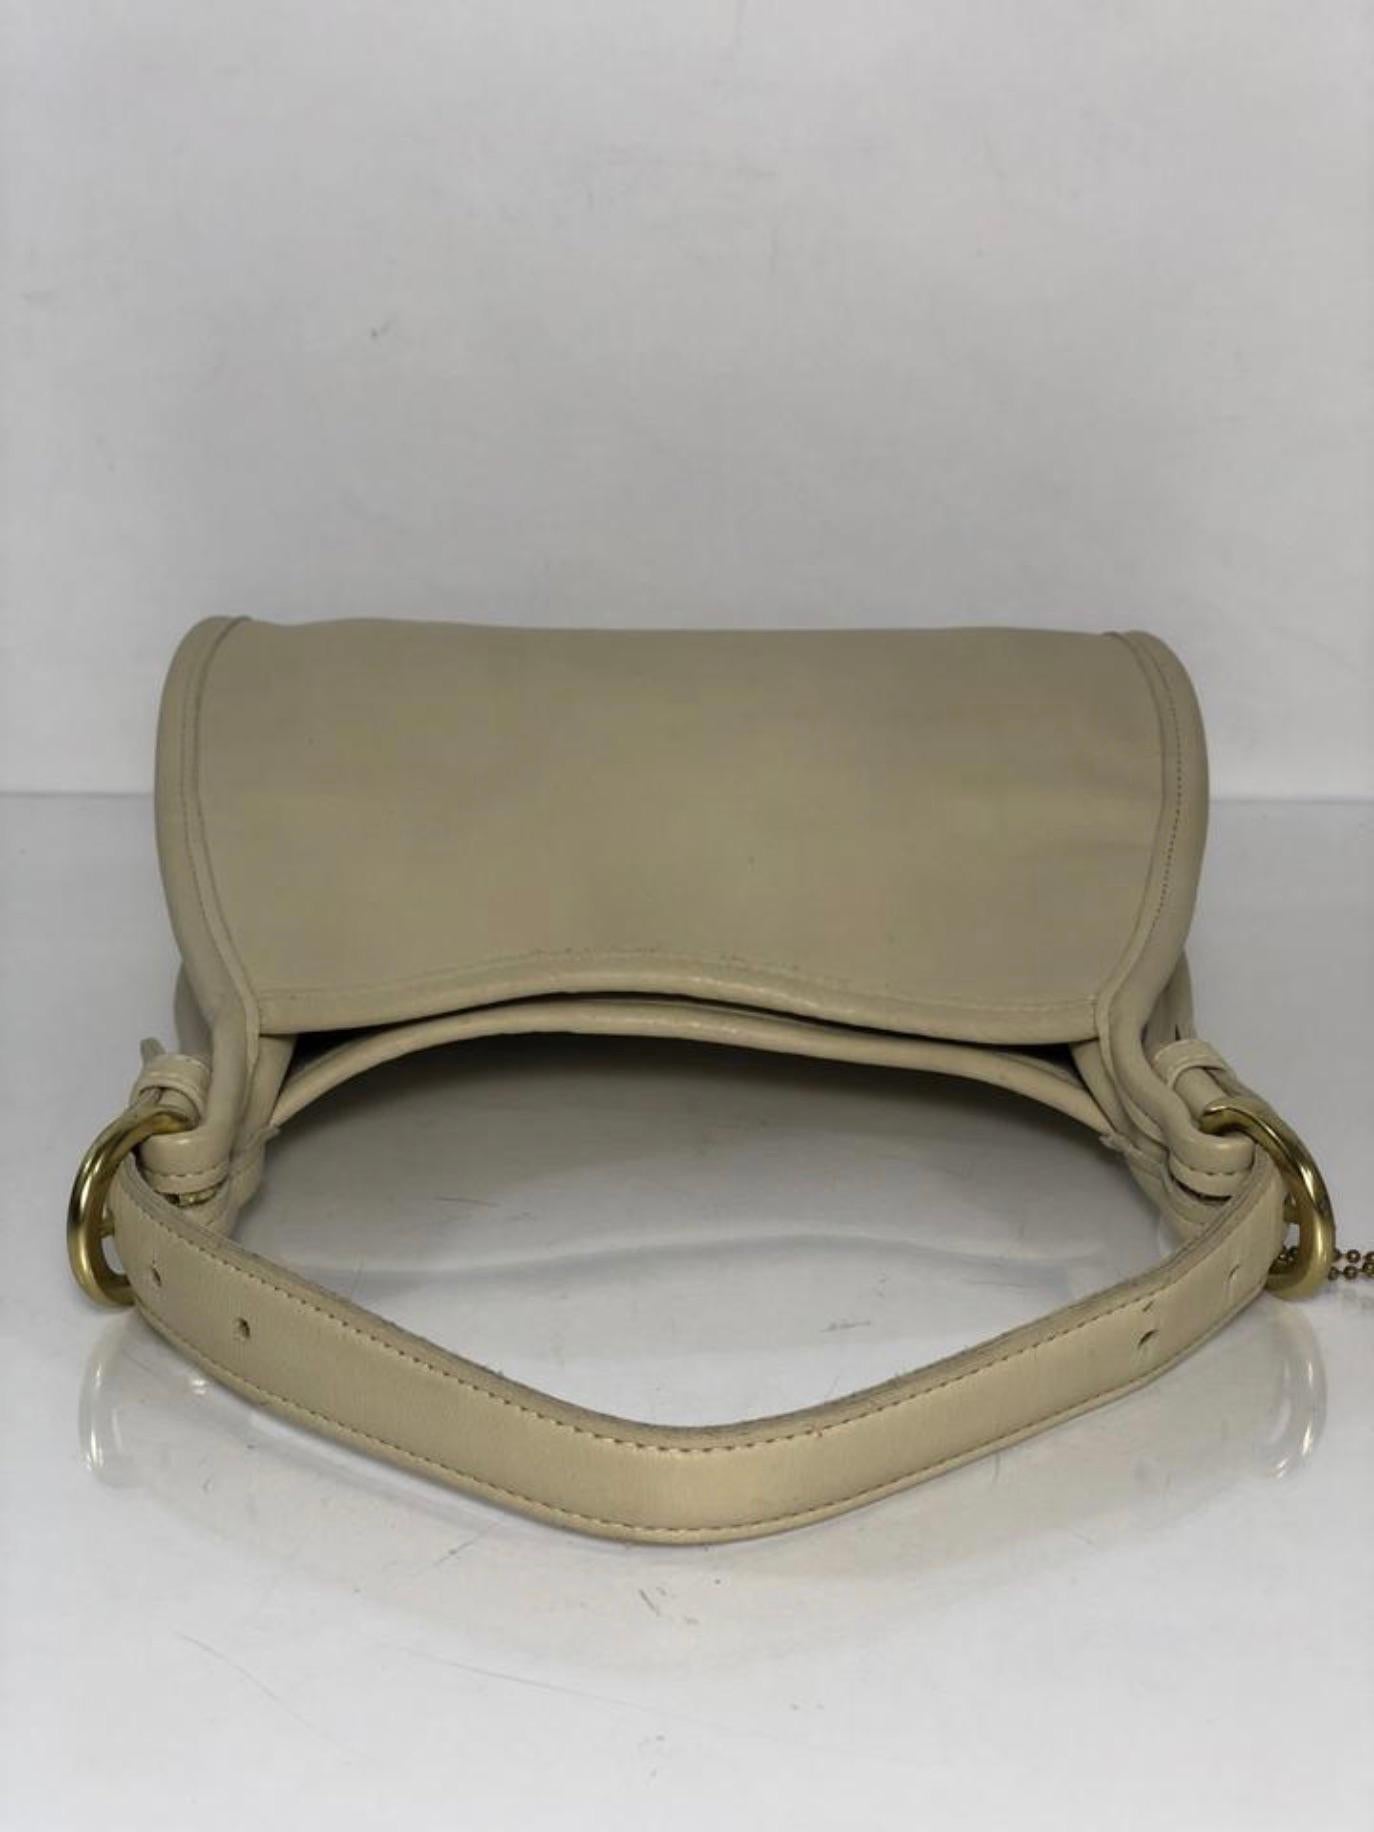  Coach Vintage Mini Soho Shoulder Handbag In Excellent Condition For Sale In Saint Charles, IL